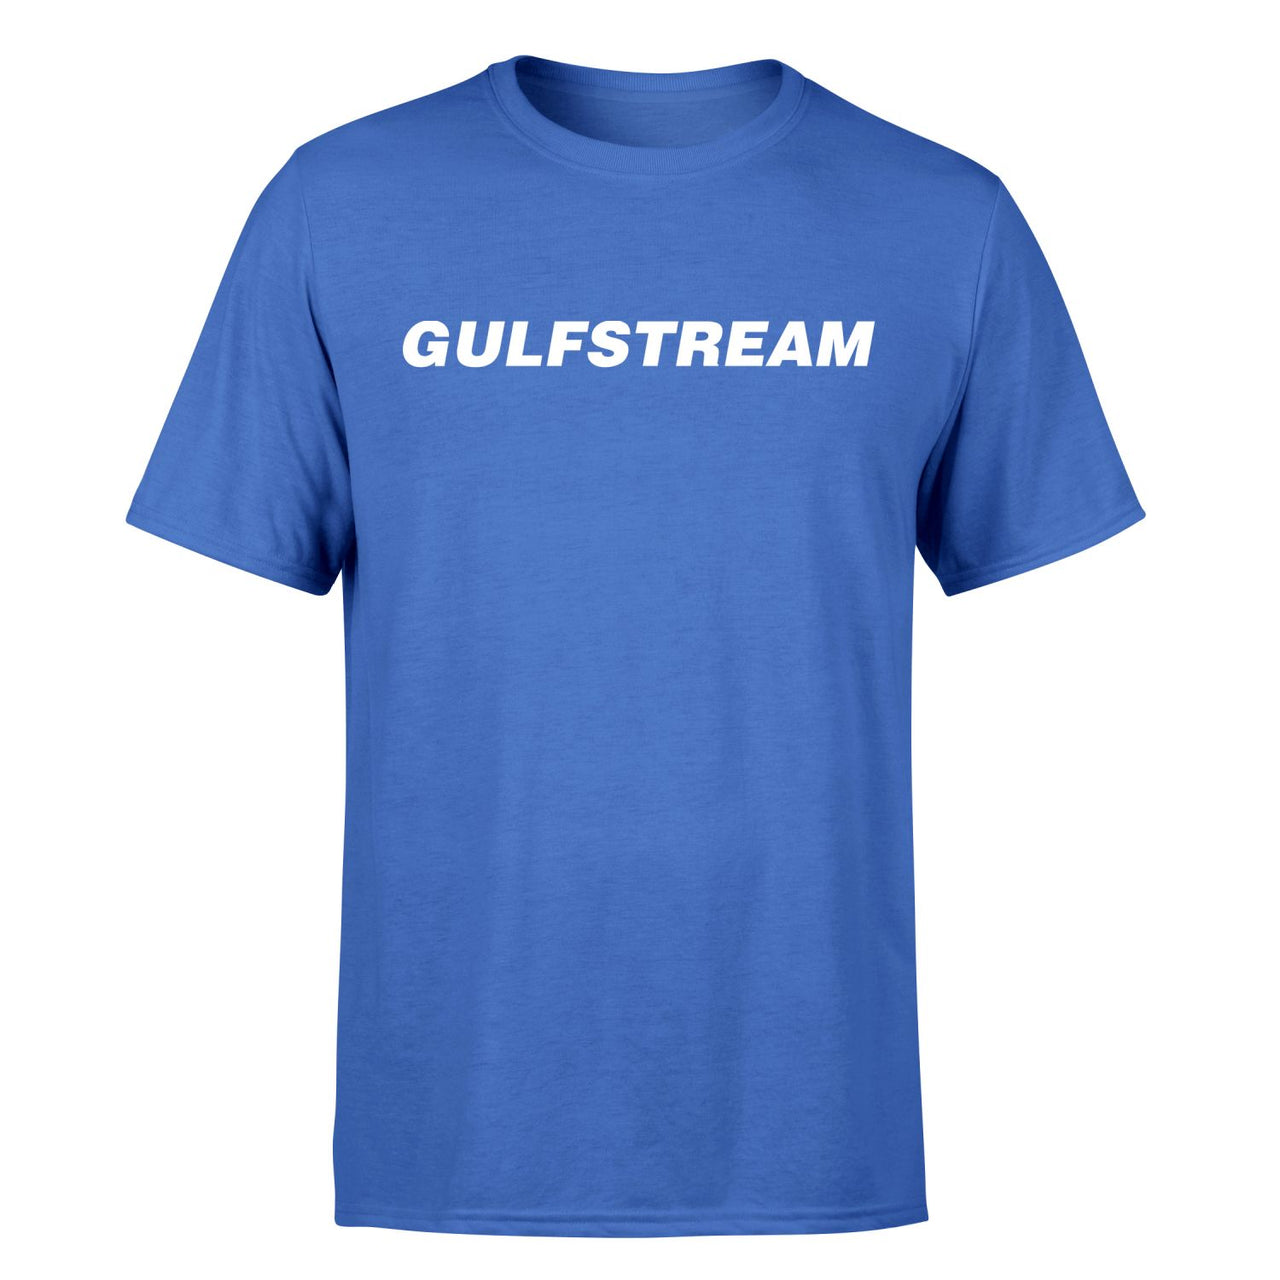 Gulfstream & Text Designed T-Shirts